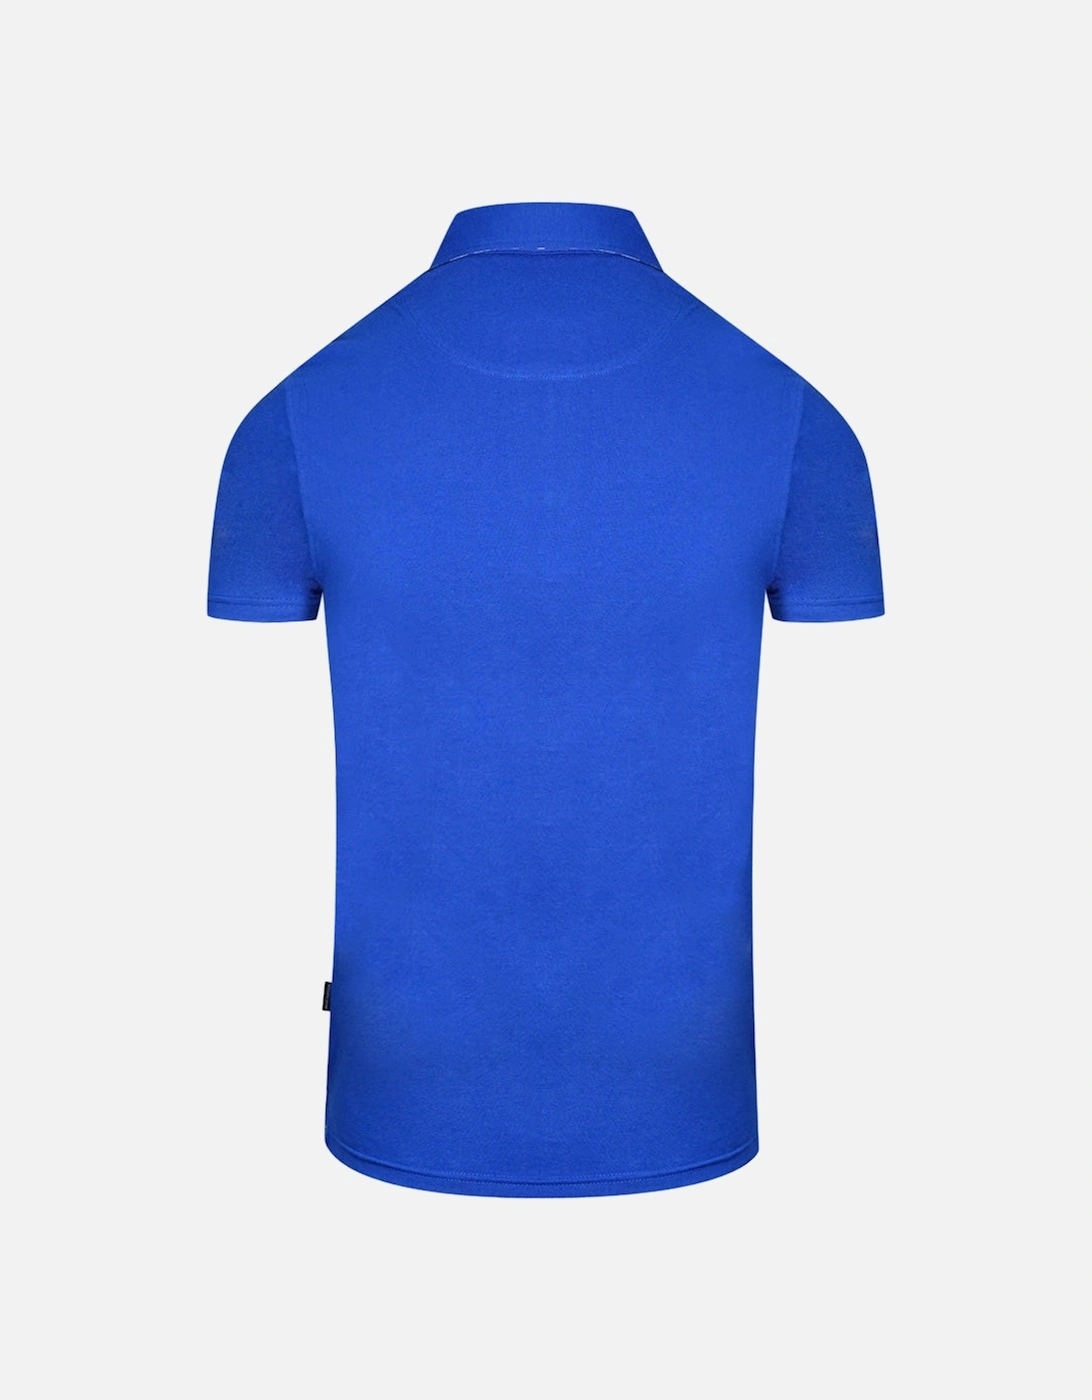 Aldis Crest Block Logo Blue Polo Shirt